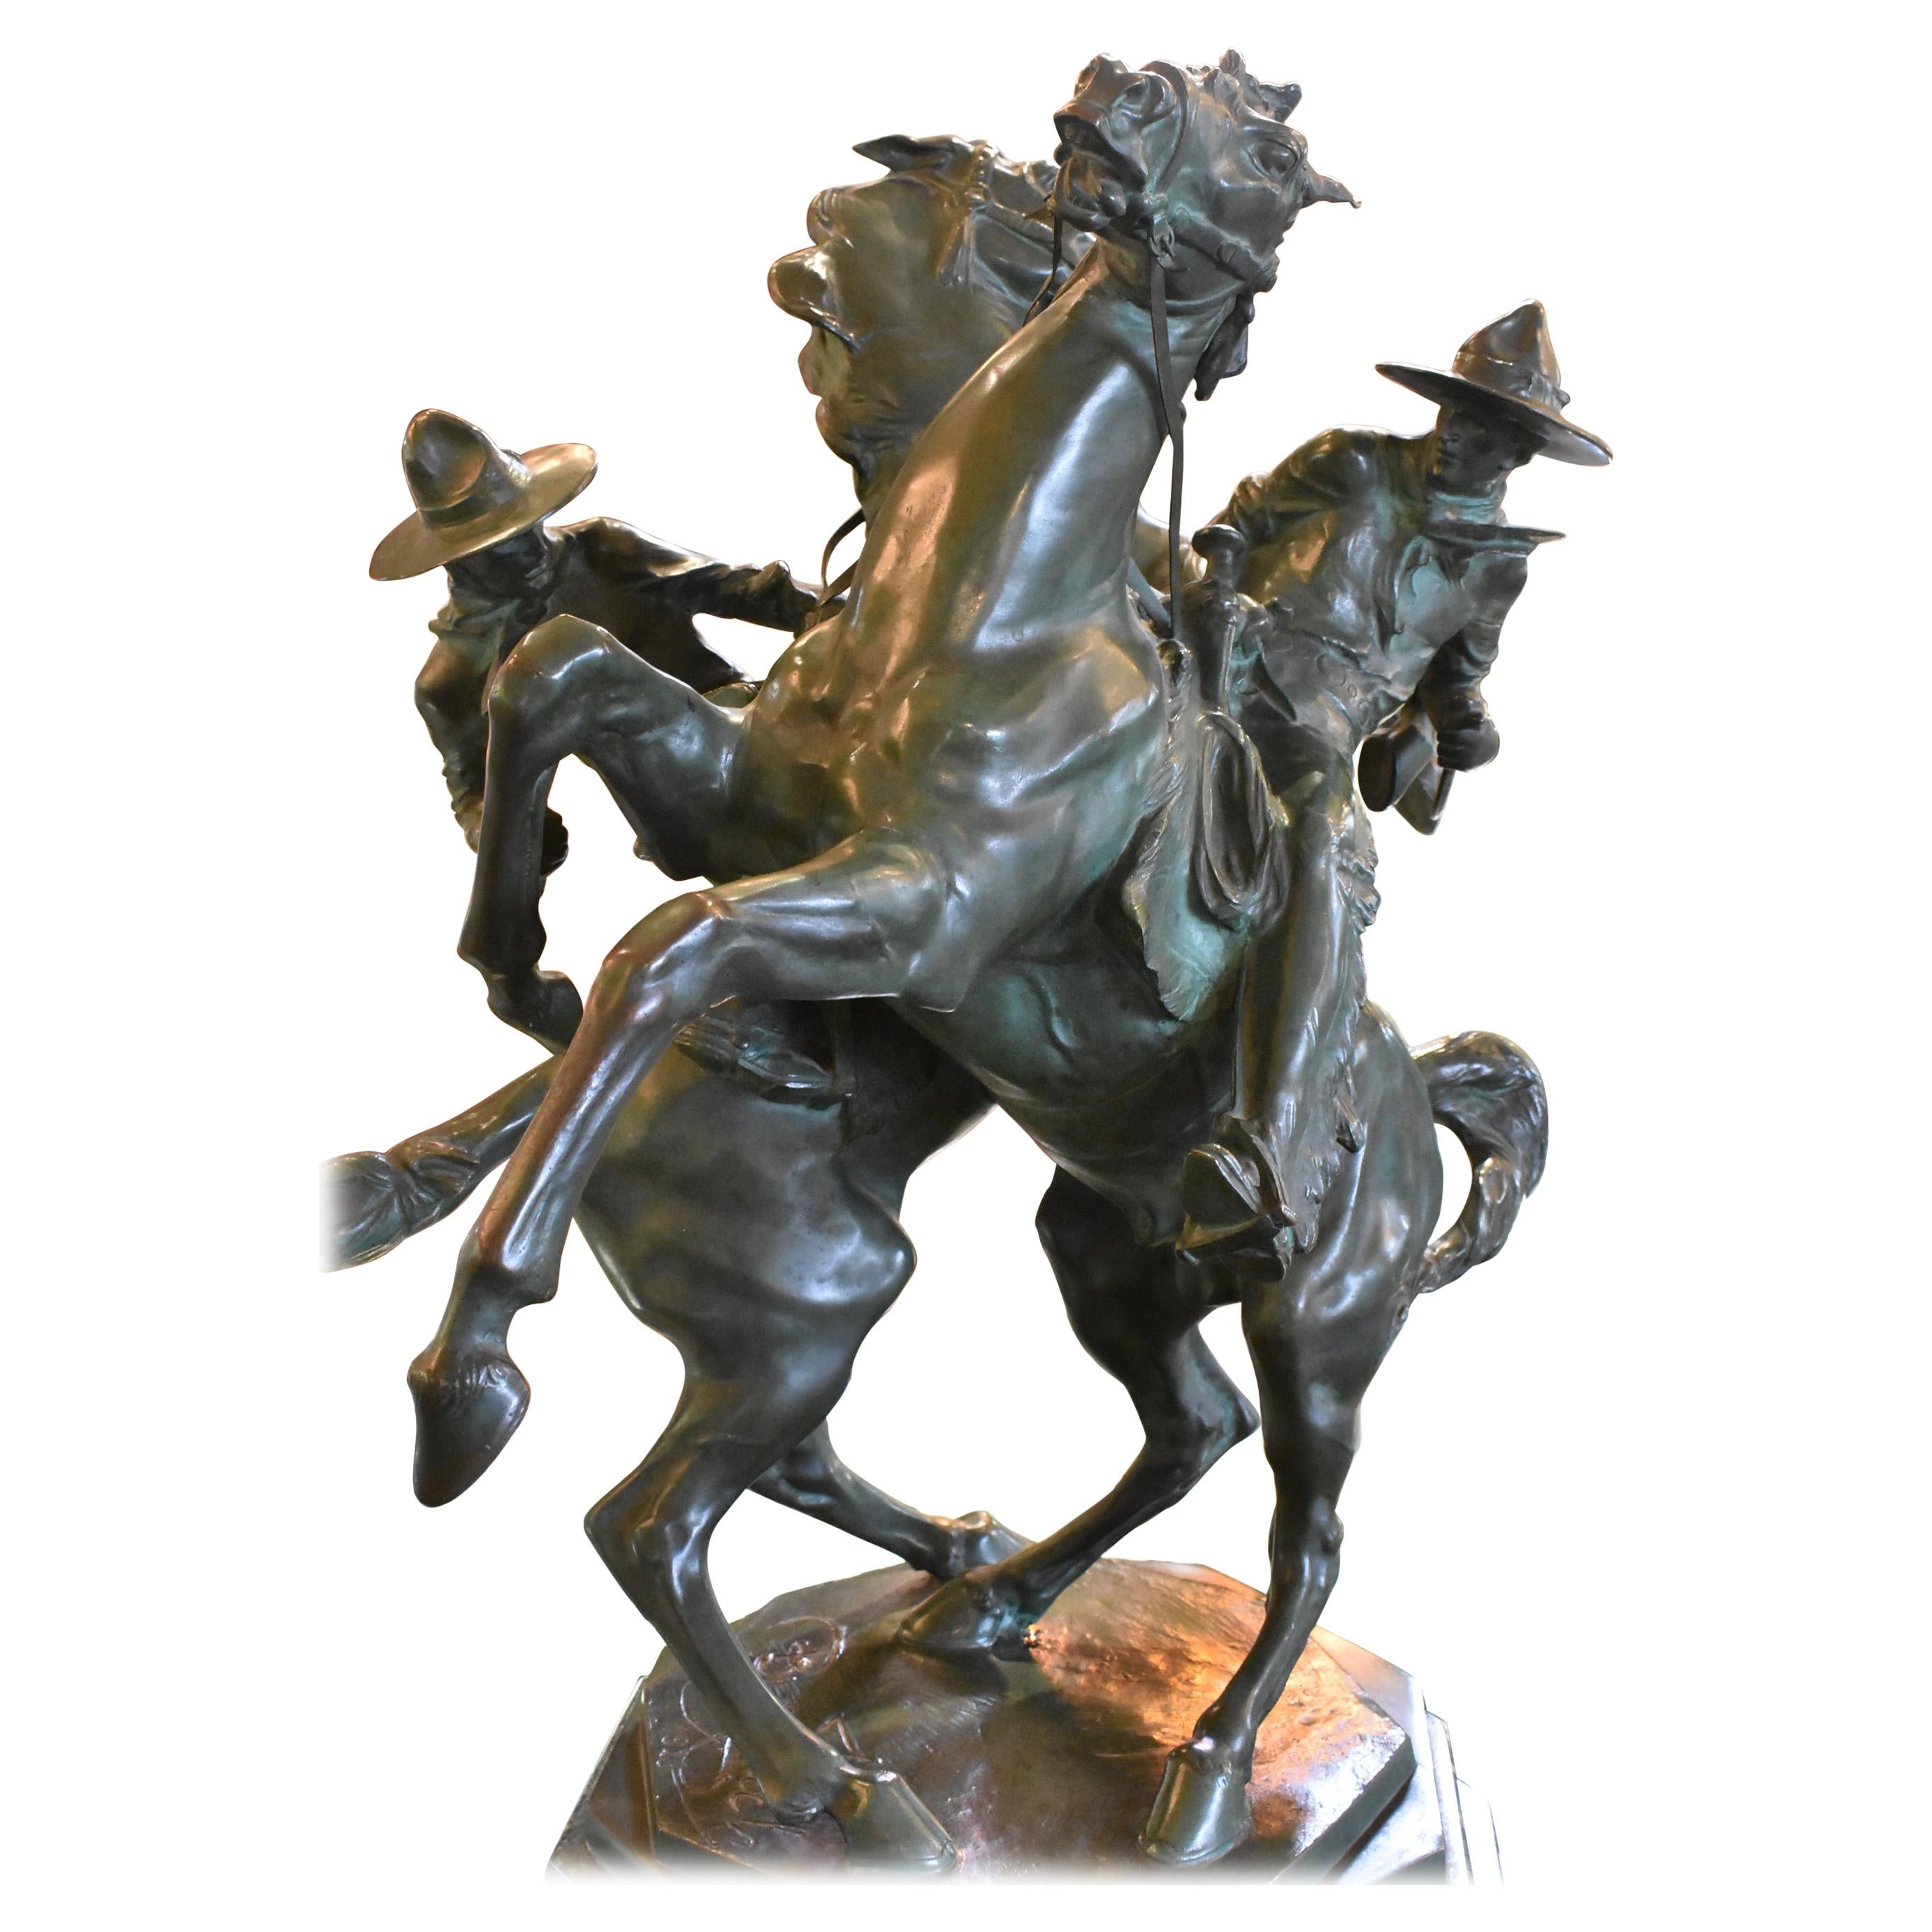 Bruno Zach Bronze Sculpture Horses and Cowboys "Chevaux en Cabriole" Signed 1923